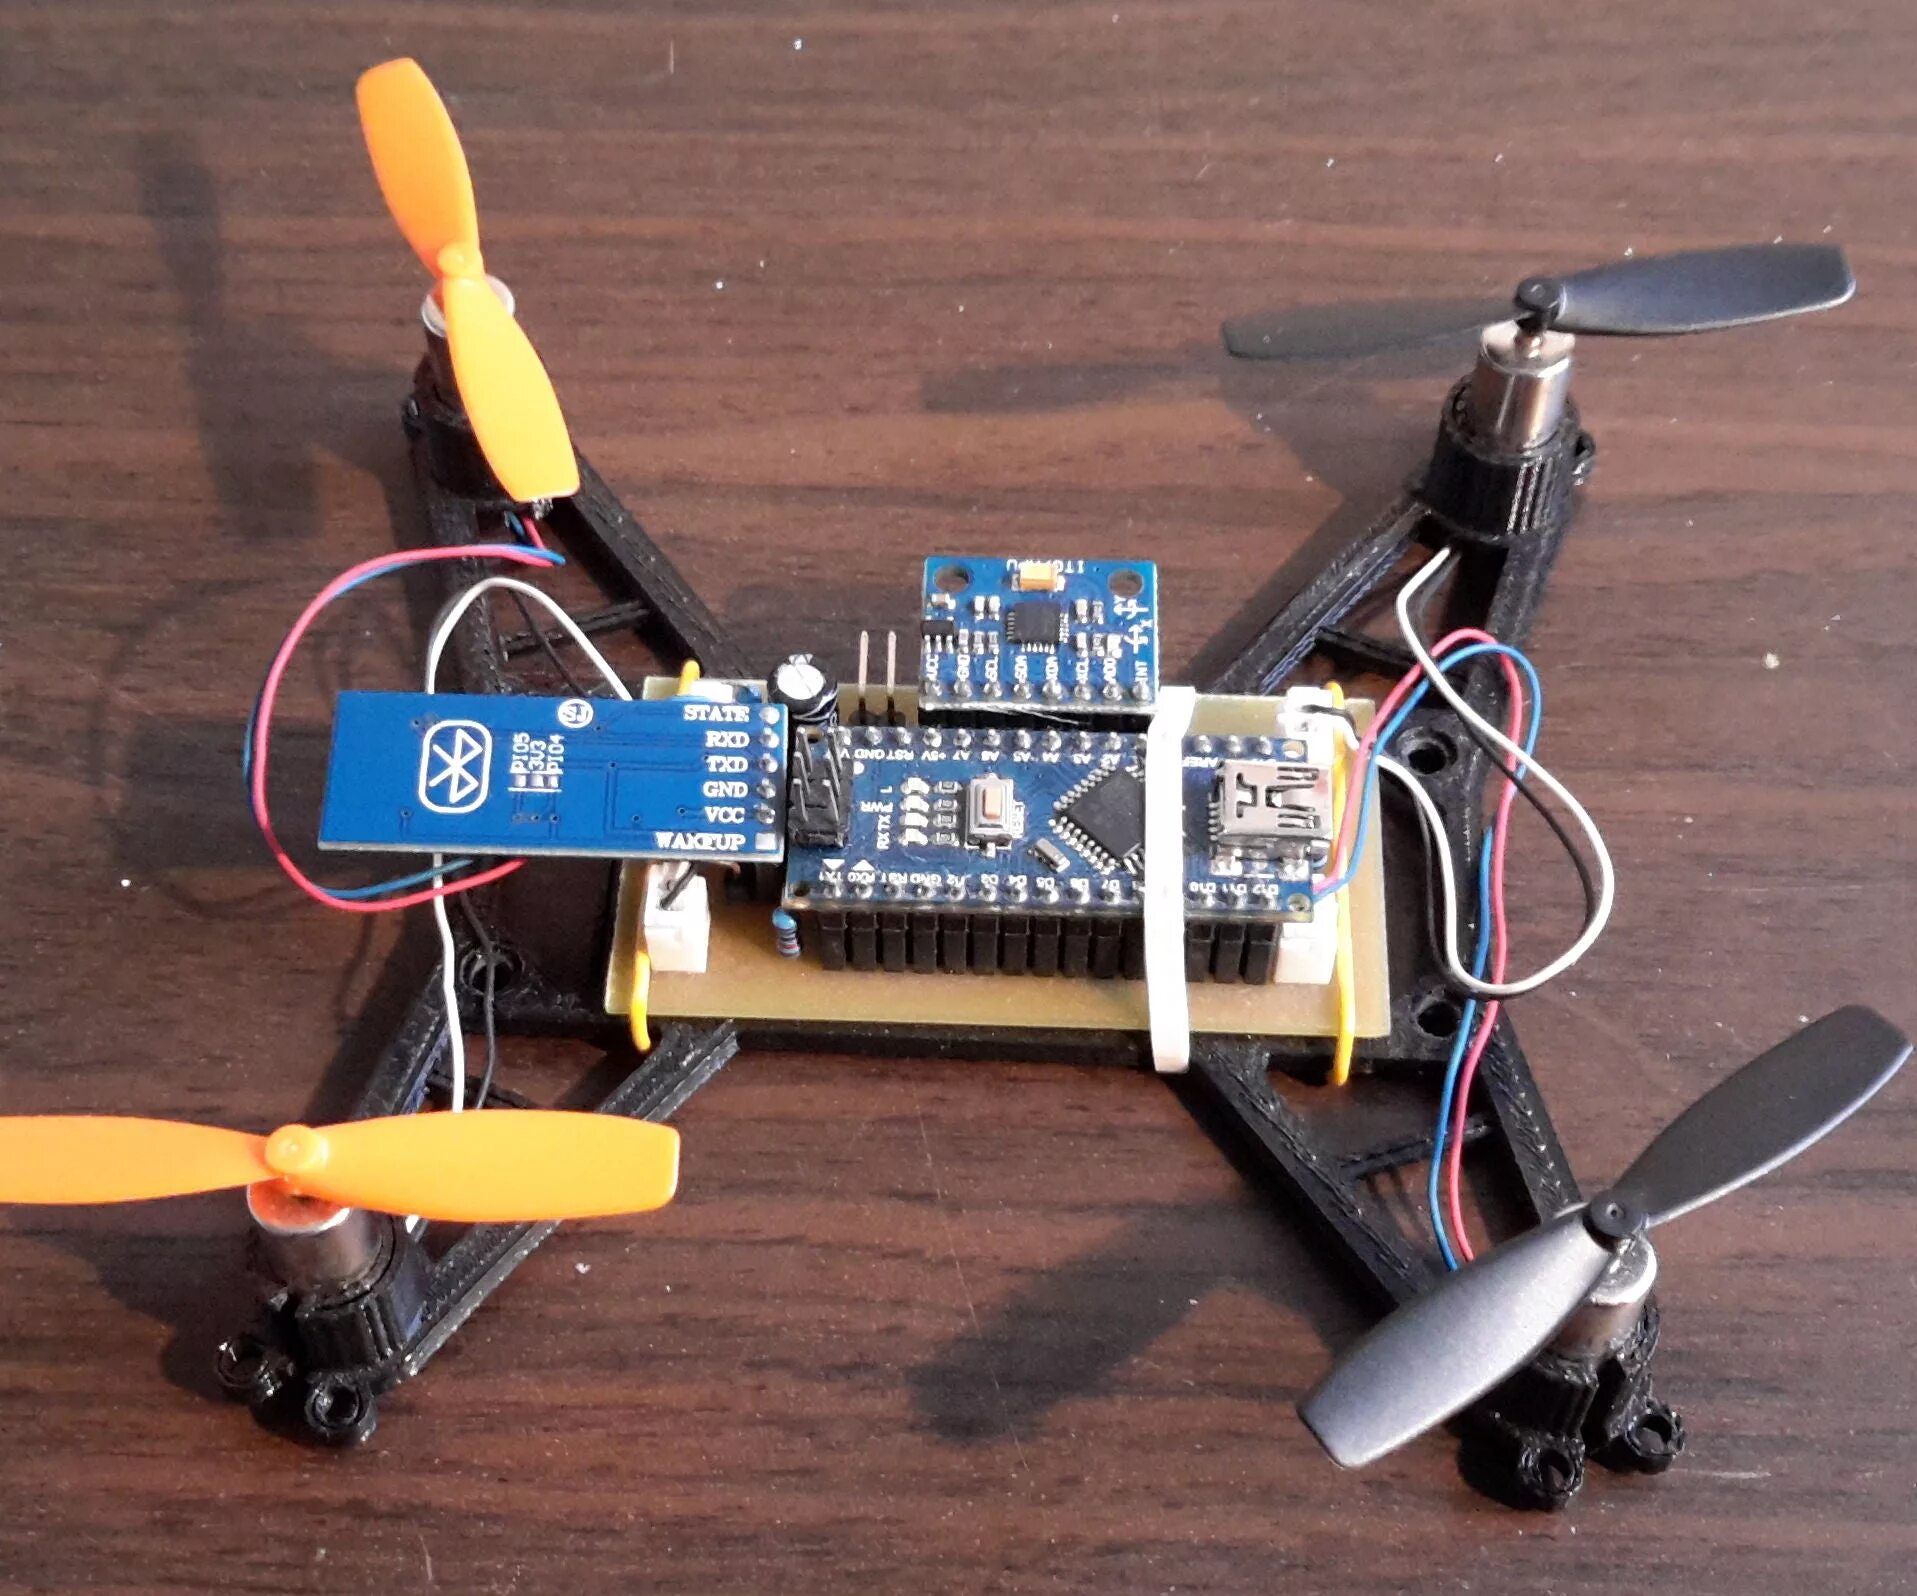 Самодельное радиоуправление. Nrf24l01 Arduino. DIY Quadcopter with Arduino Nano. Ардуино nrf24l01 led. Дрон на ардуино нано.